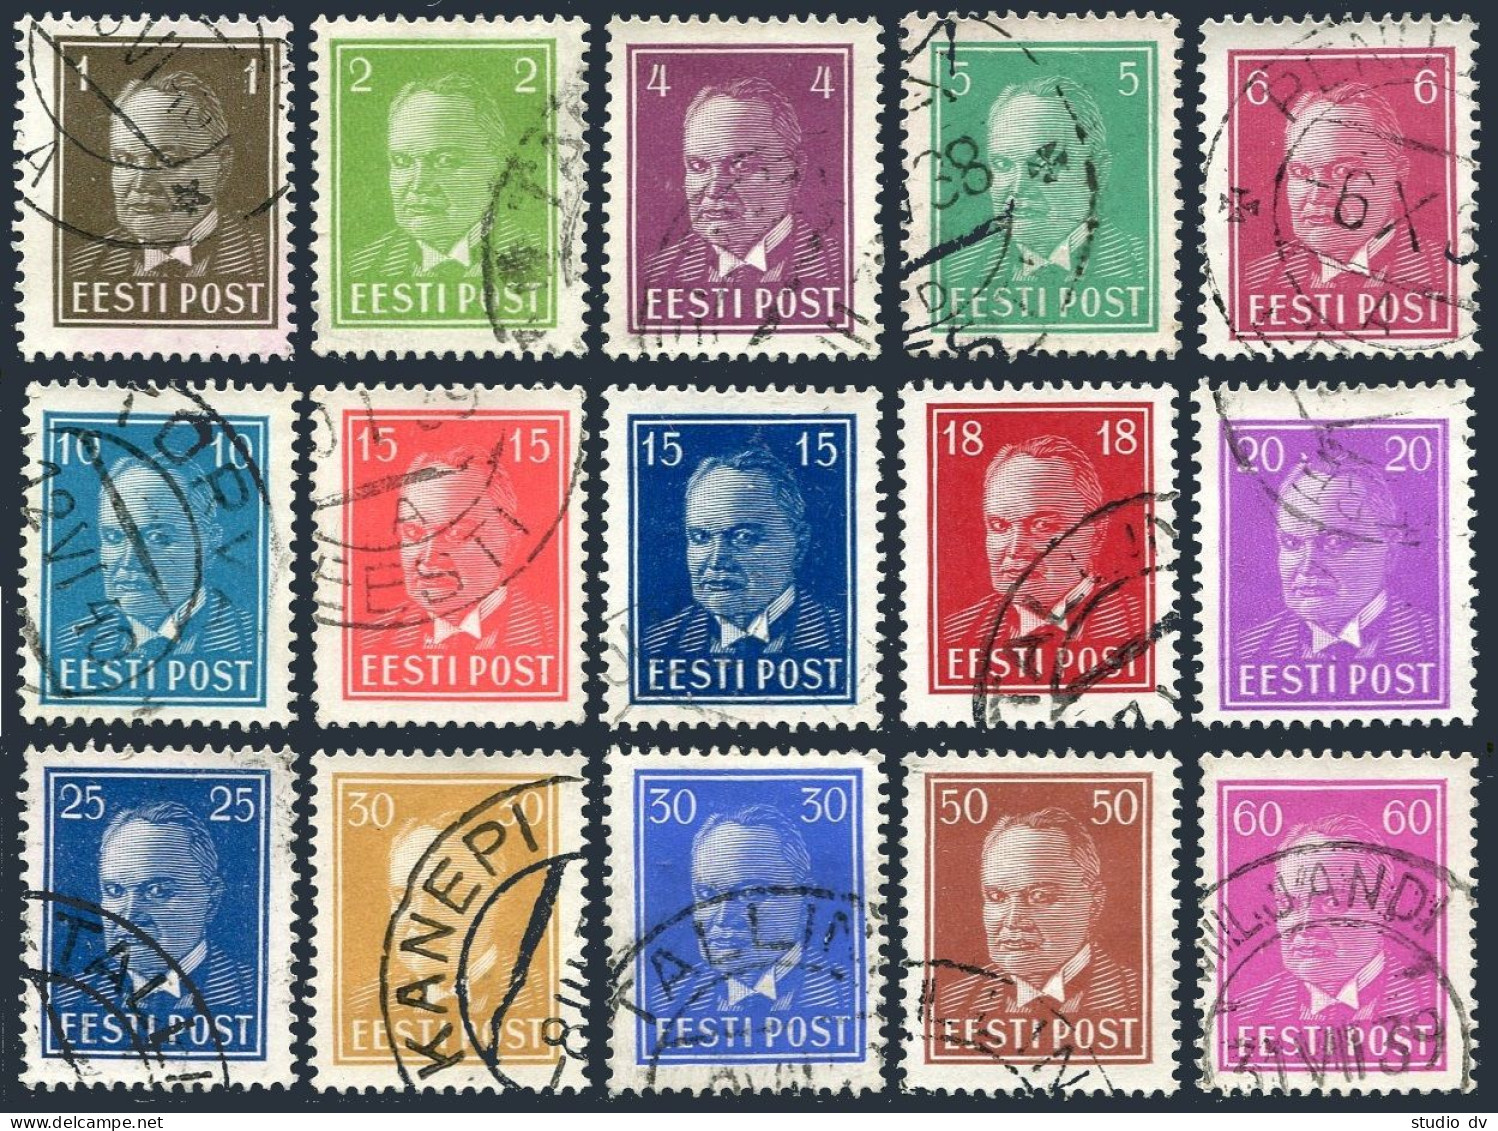 Estonia 117/133 15 Stamps,used.Mi 113/158. President Konstantin Pats,1936-1940. - Estonie